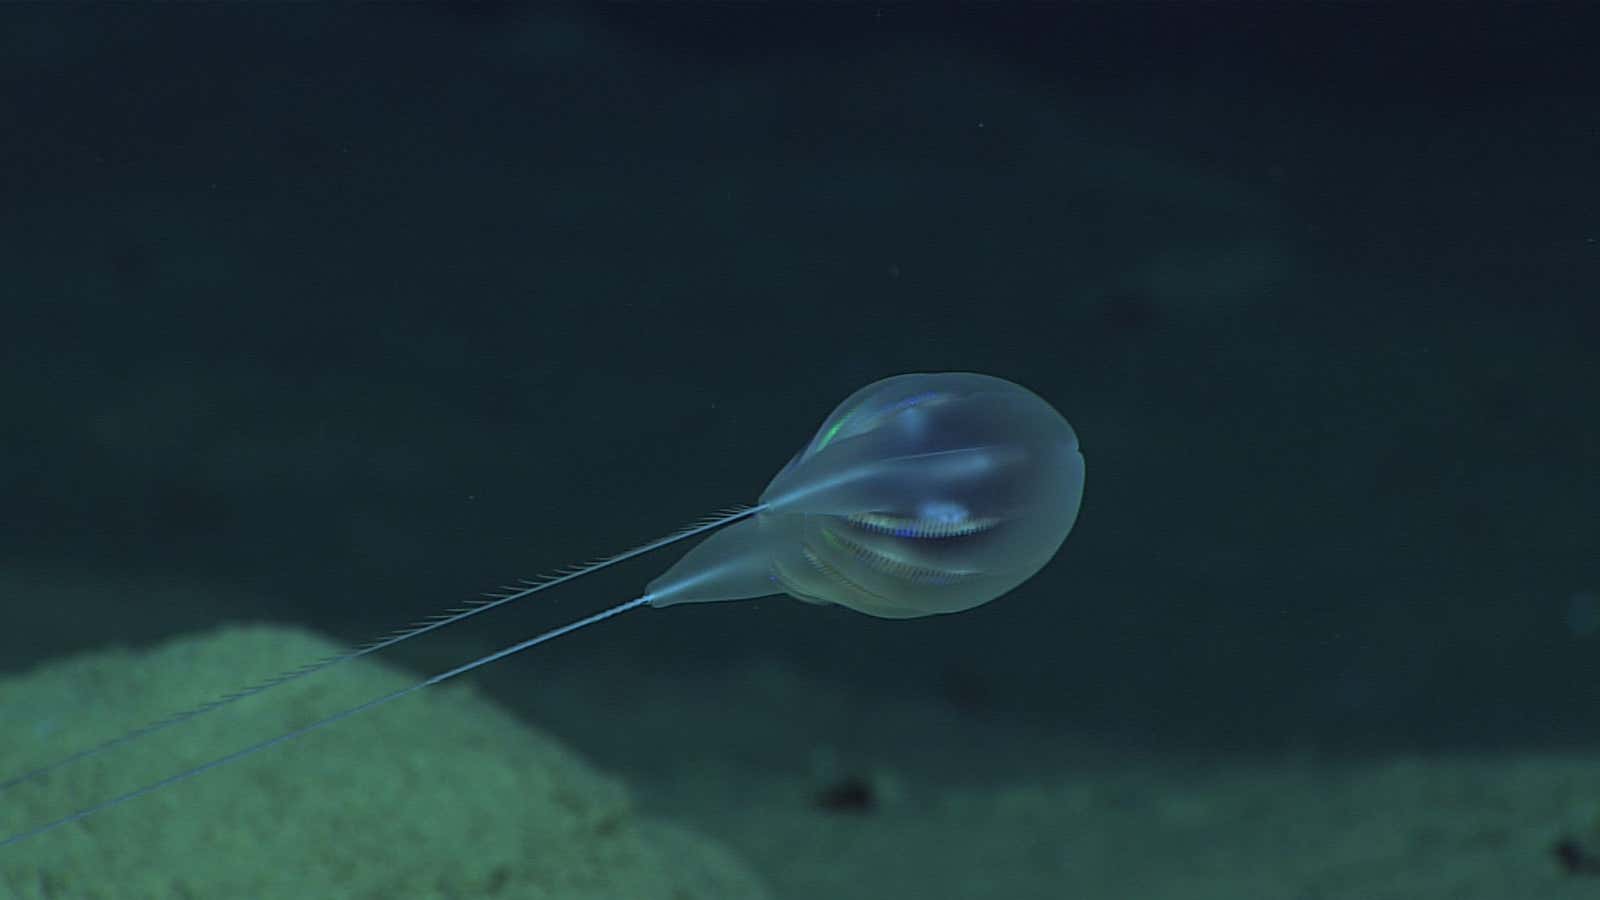 Scientists believe this deep sea ctenophore is a new species.